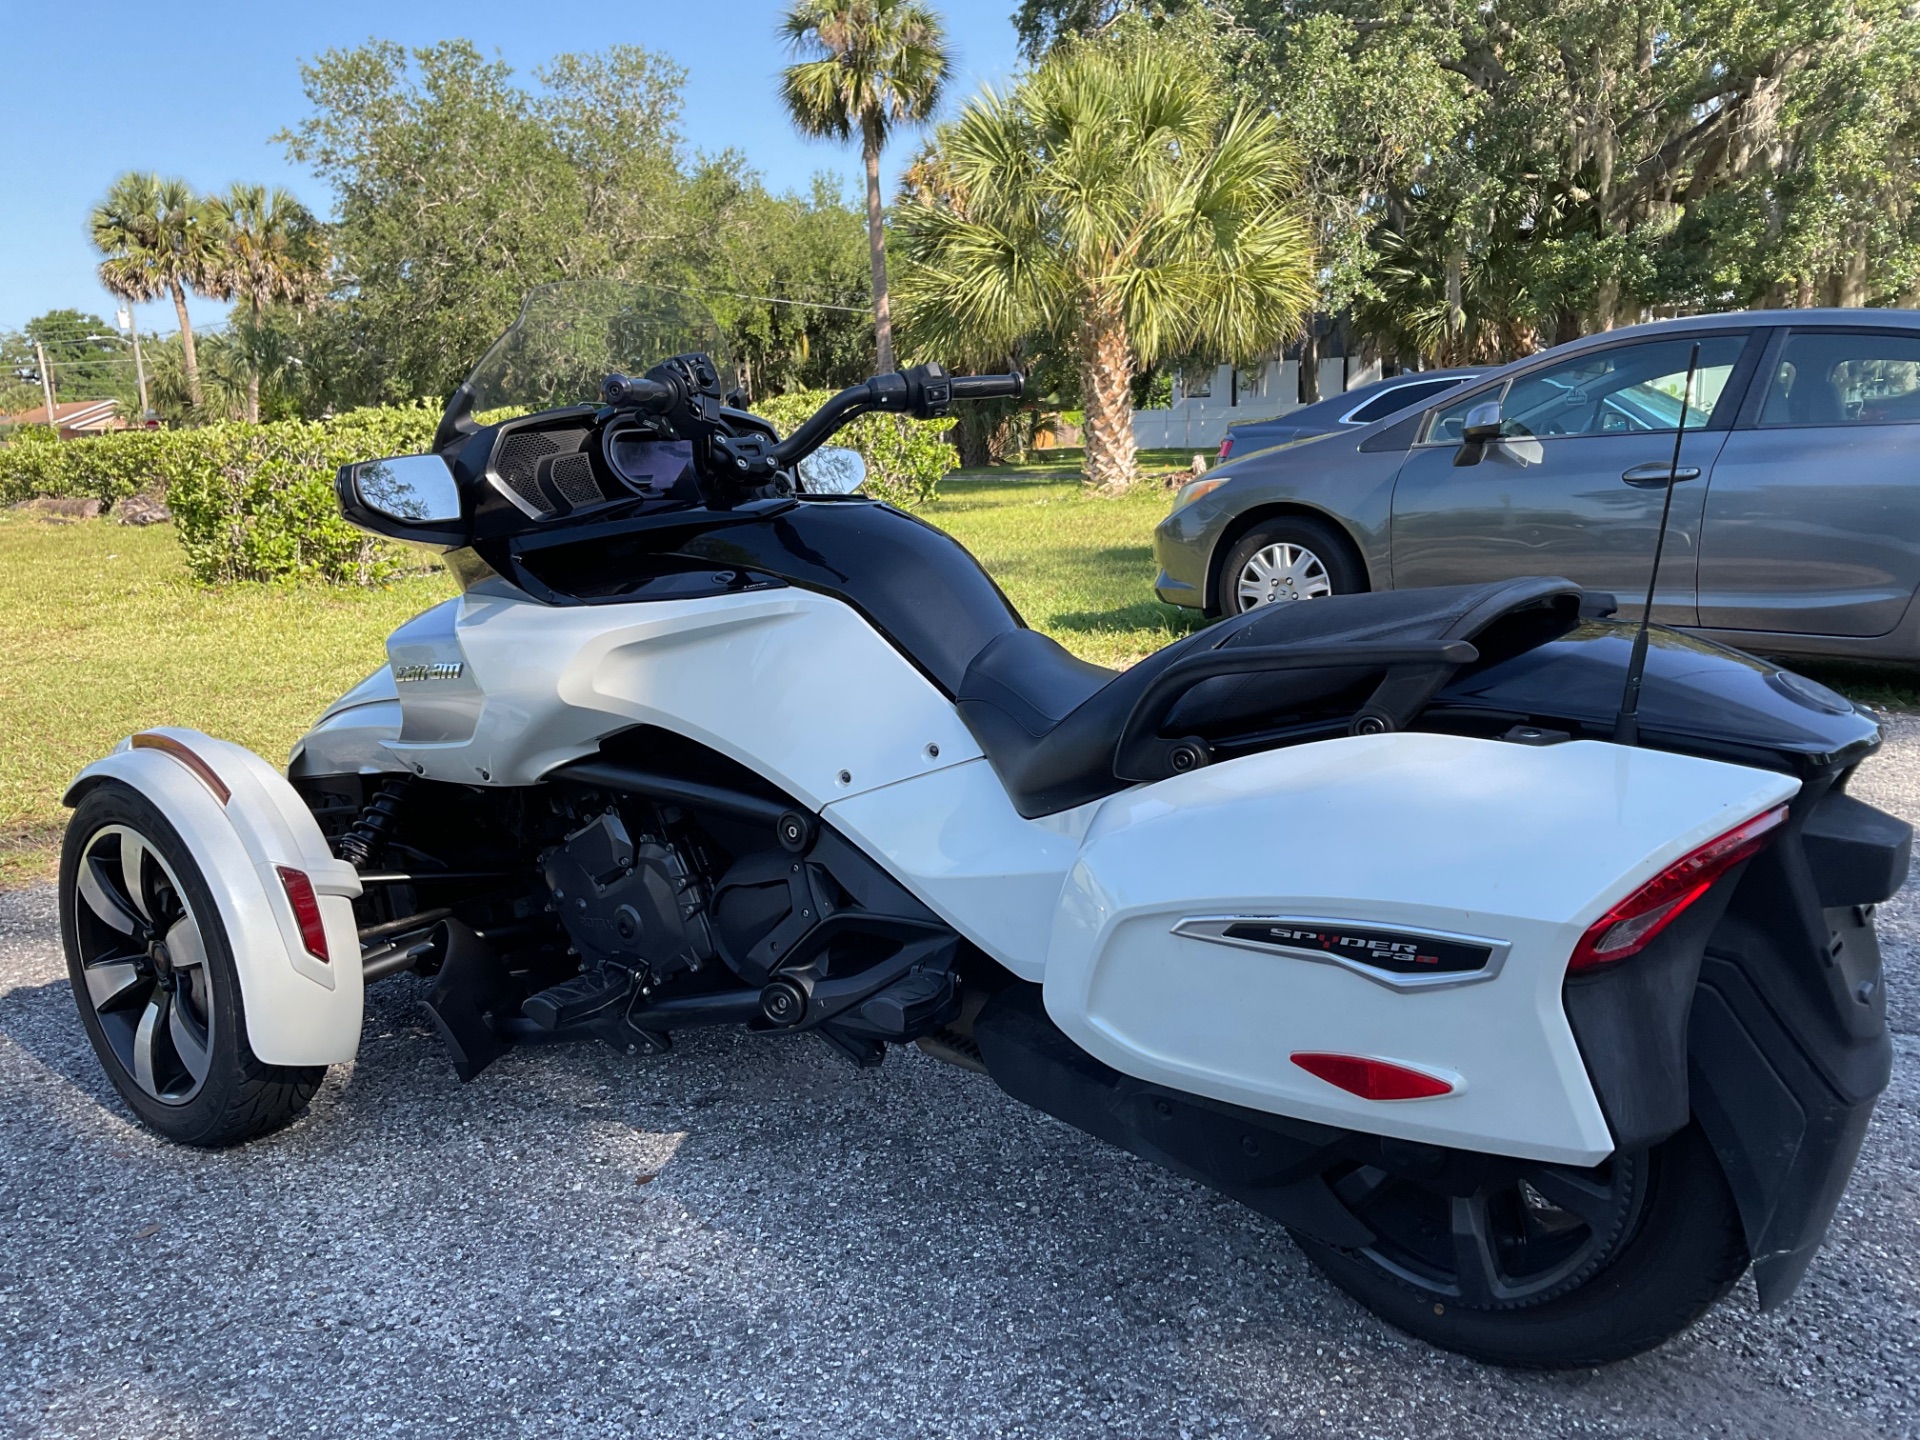 2018 Can-Am Spyder F3-T in Sanford, Florida - Photo 6